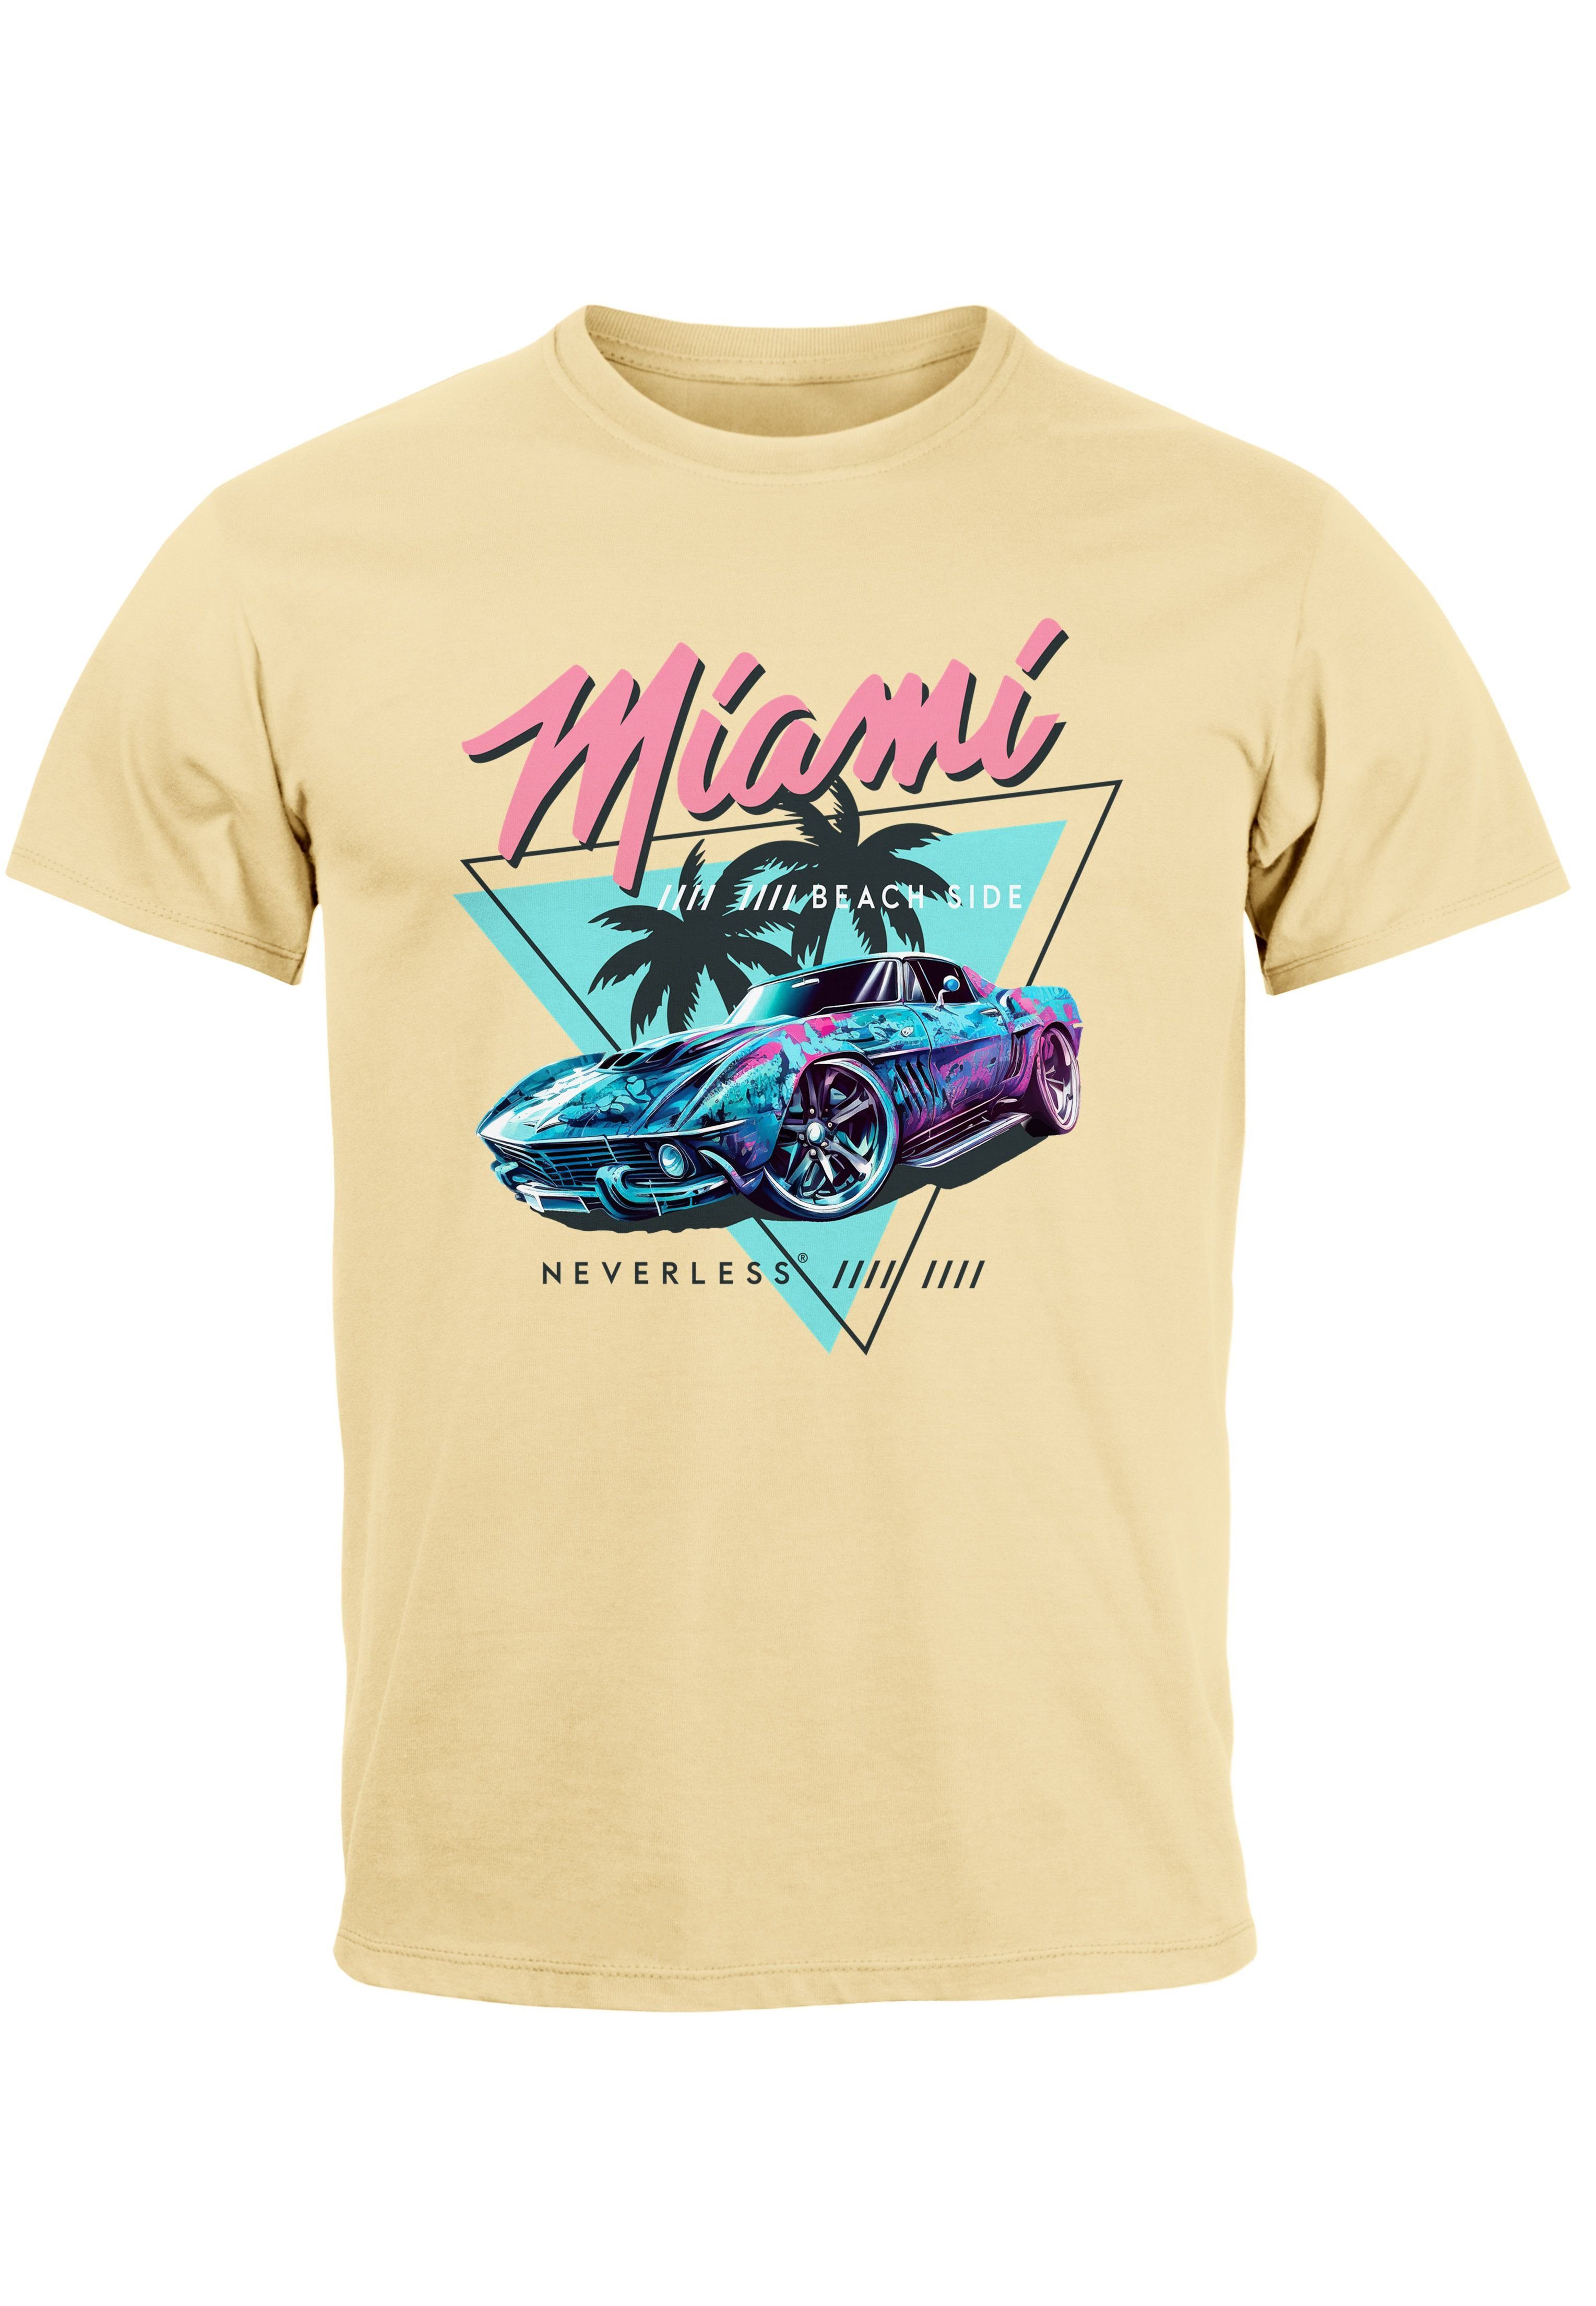 Neverless Print-Shirt Herren T-Shirt Surfing USA Beach Bedruckt natur Print Miami Automobil mit Retro Motiv